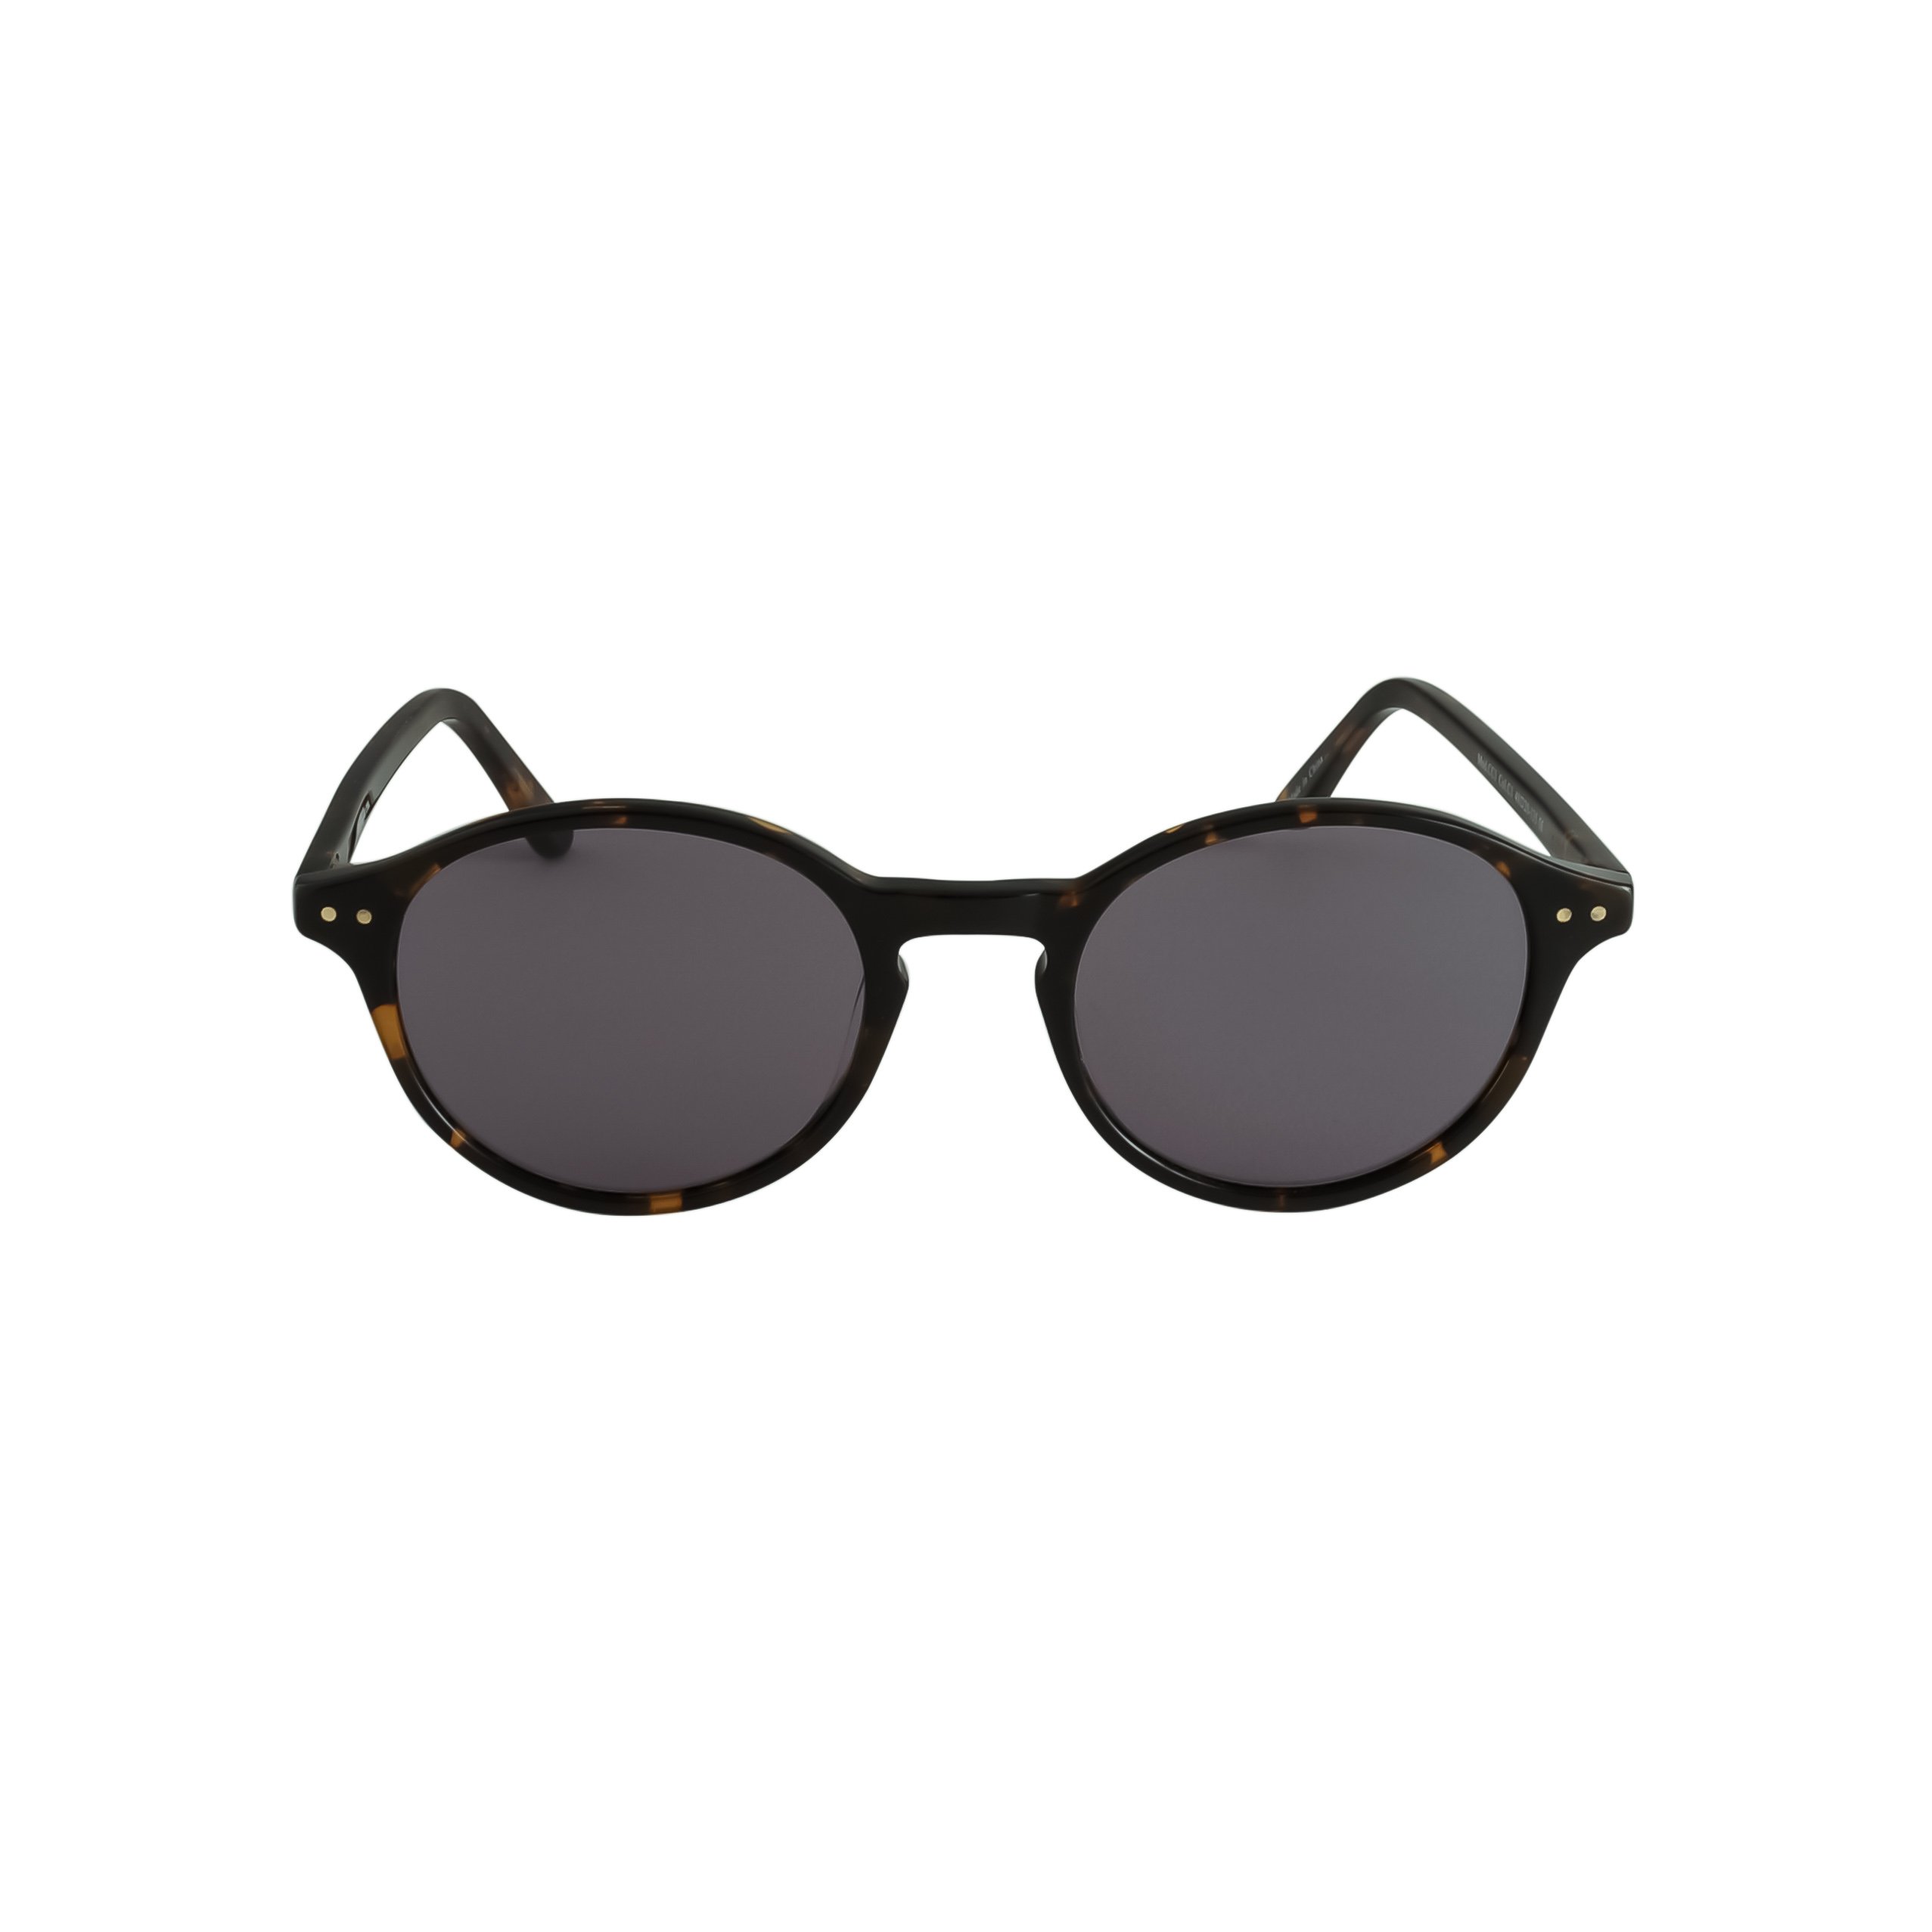 Callula Co. classic petite sunglasses front view